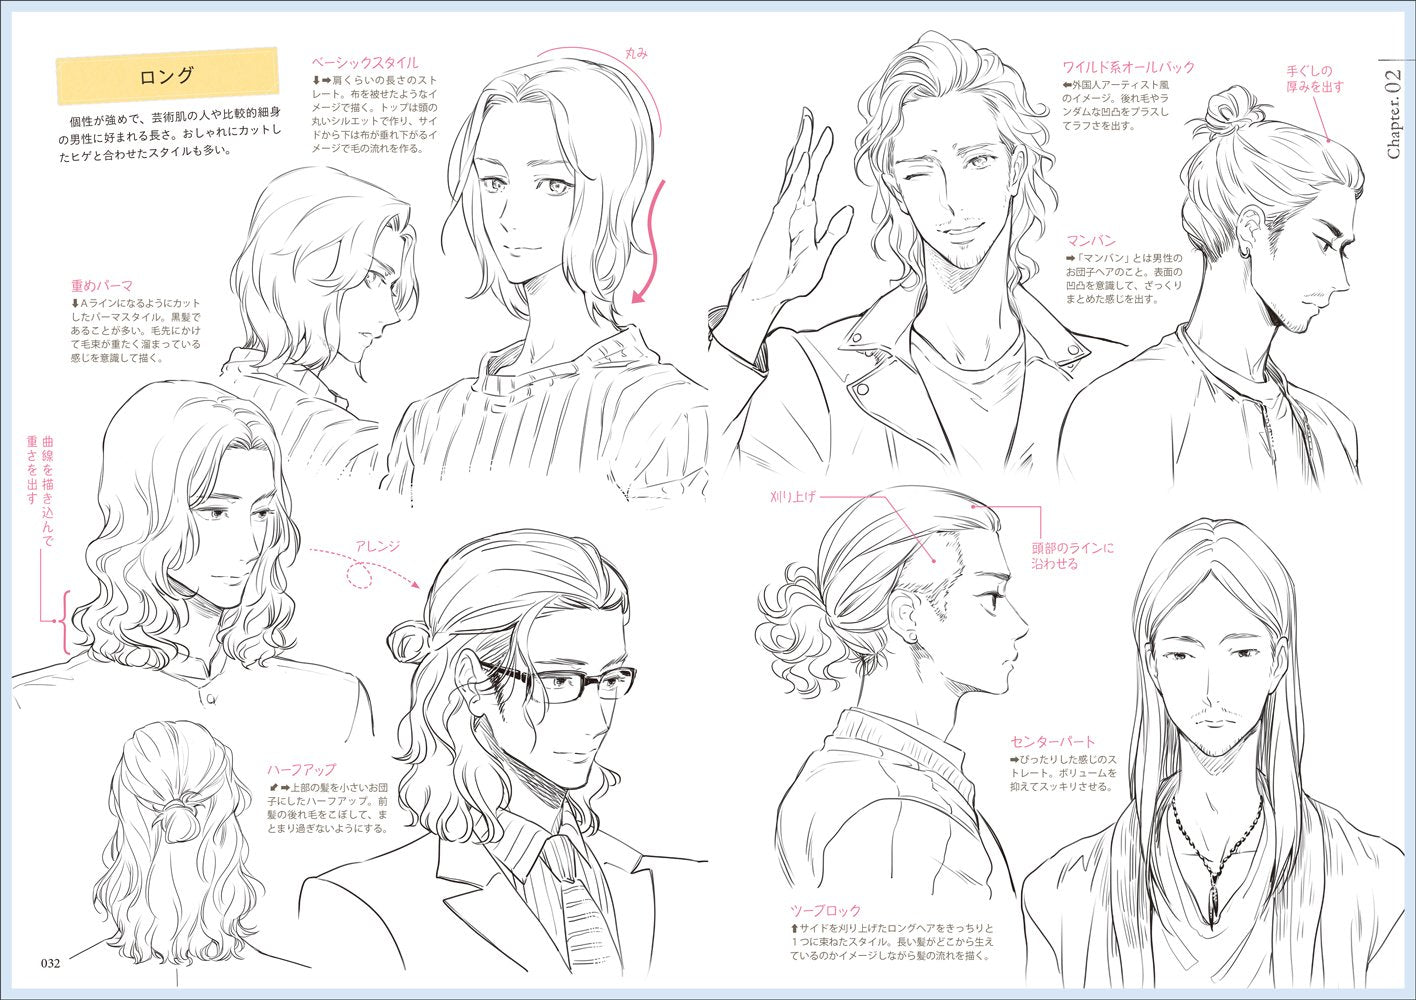 How to Draw - Hairstyle - MEN - Anime and Manga 250 styles – Otaku.co.uk